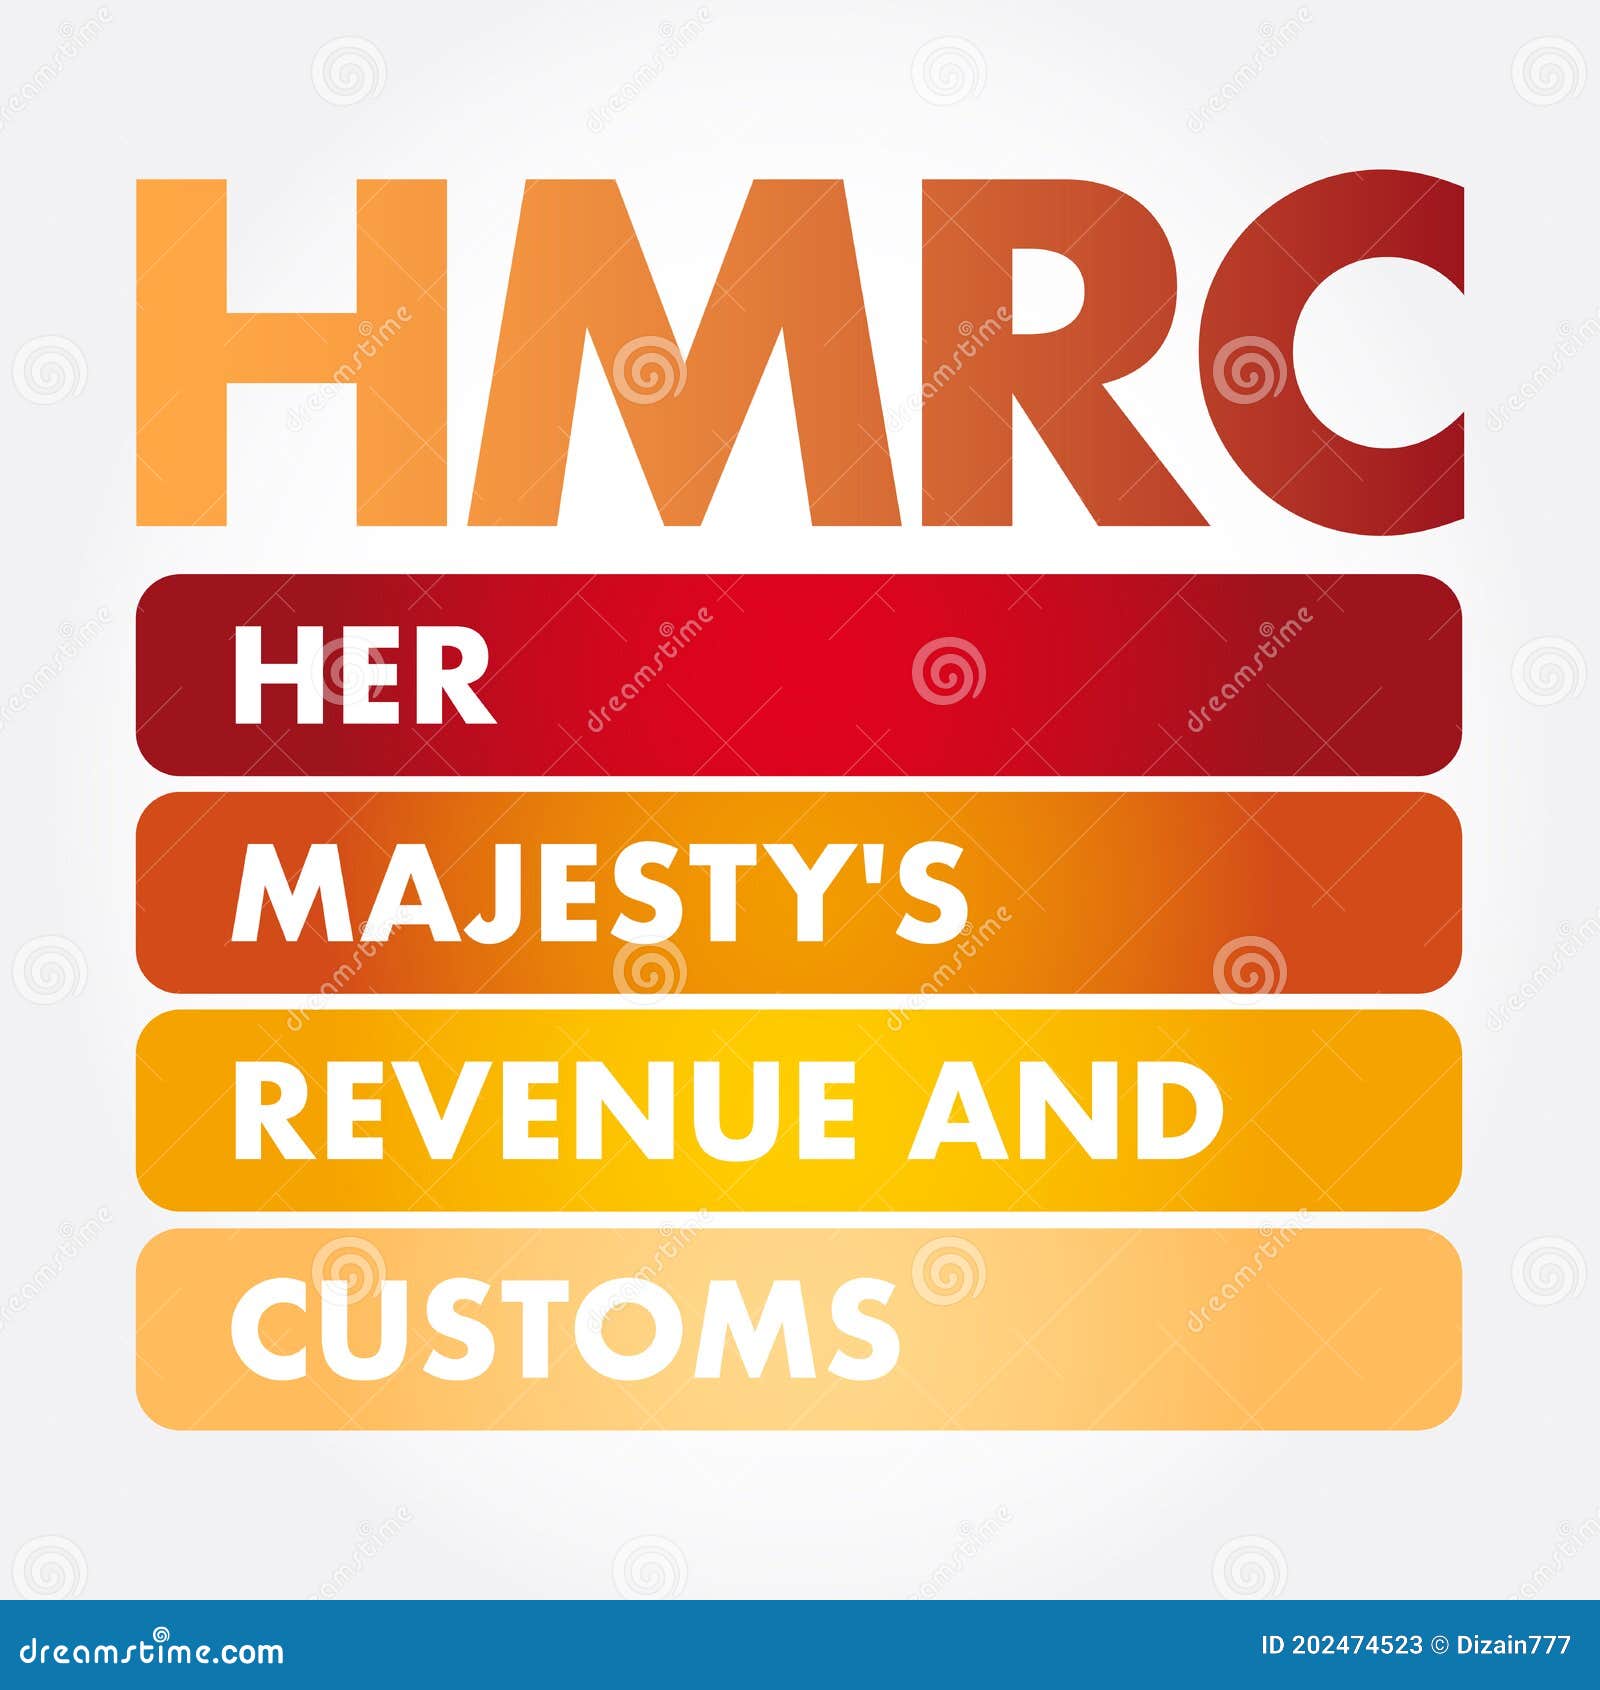 hmrc - her majesty\'s revenue and customs